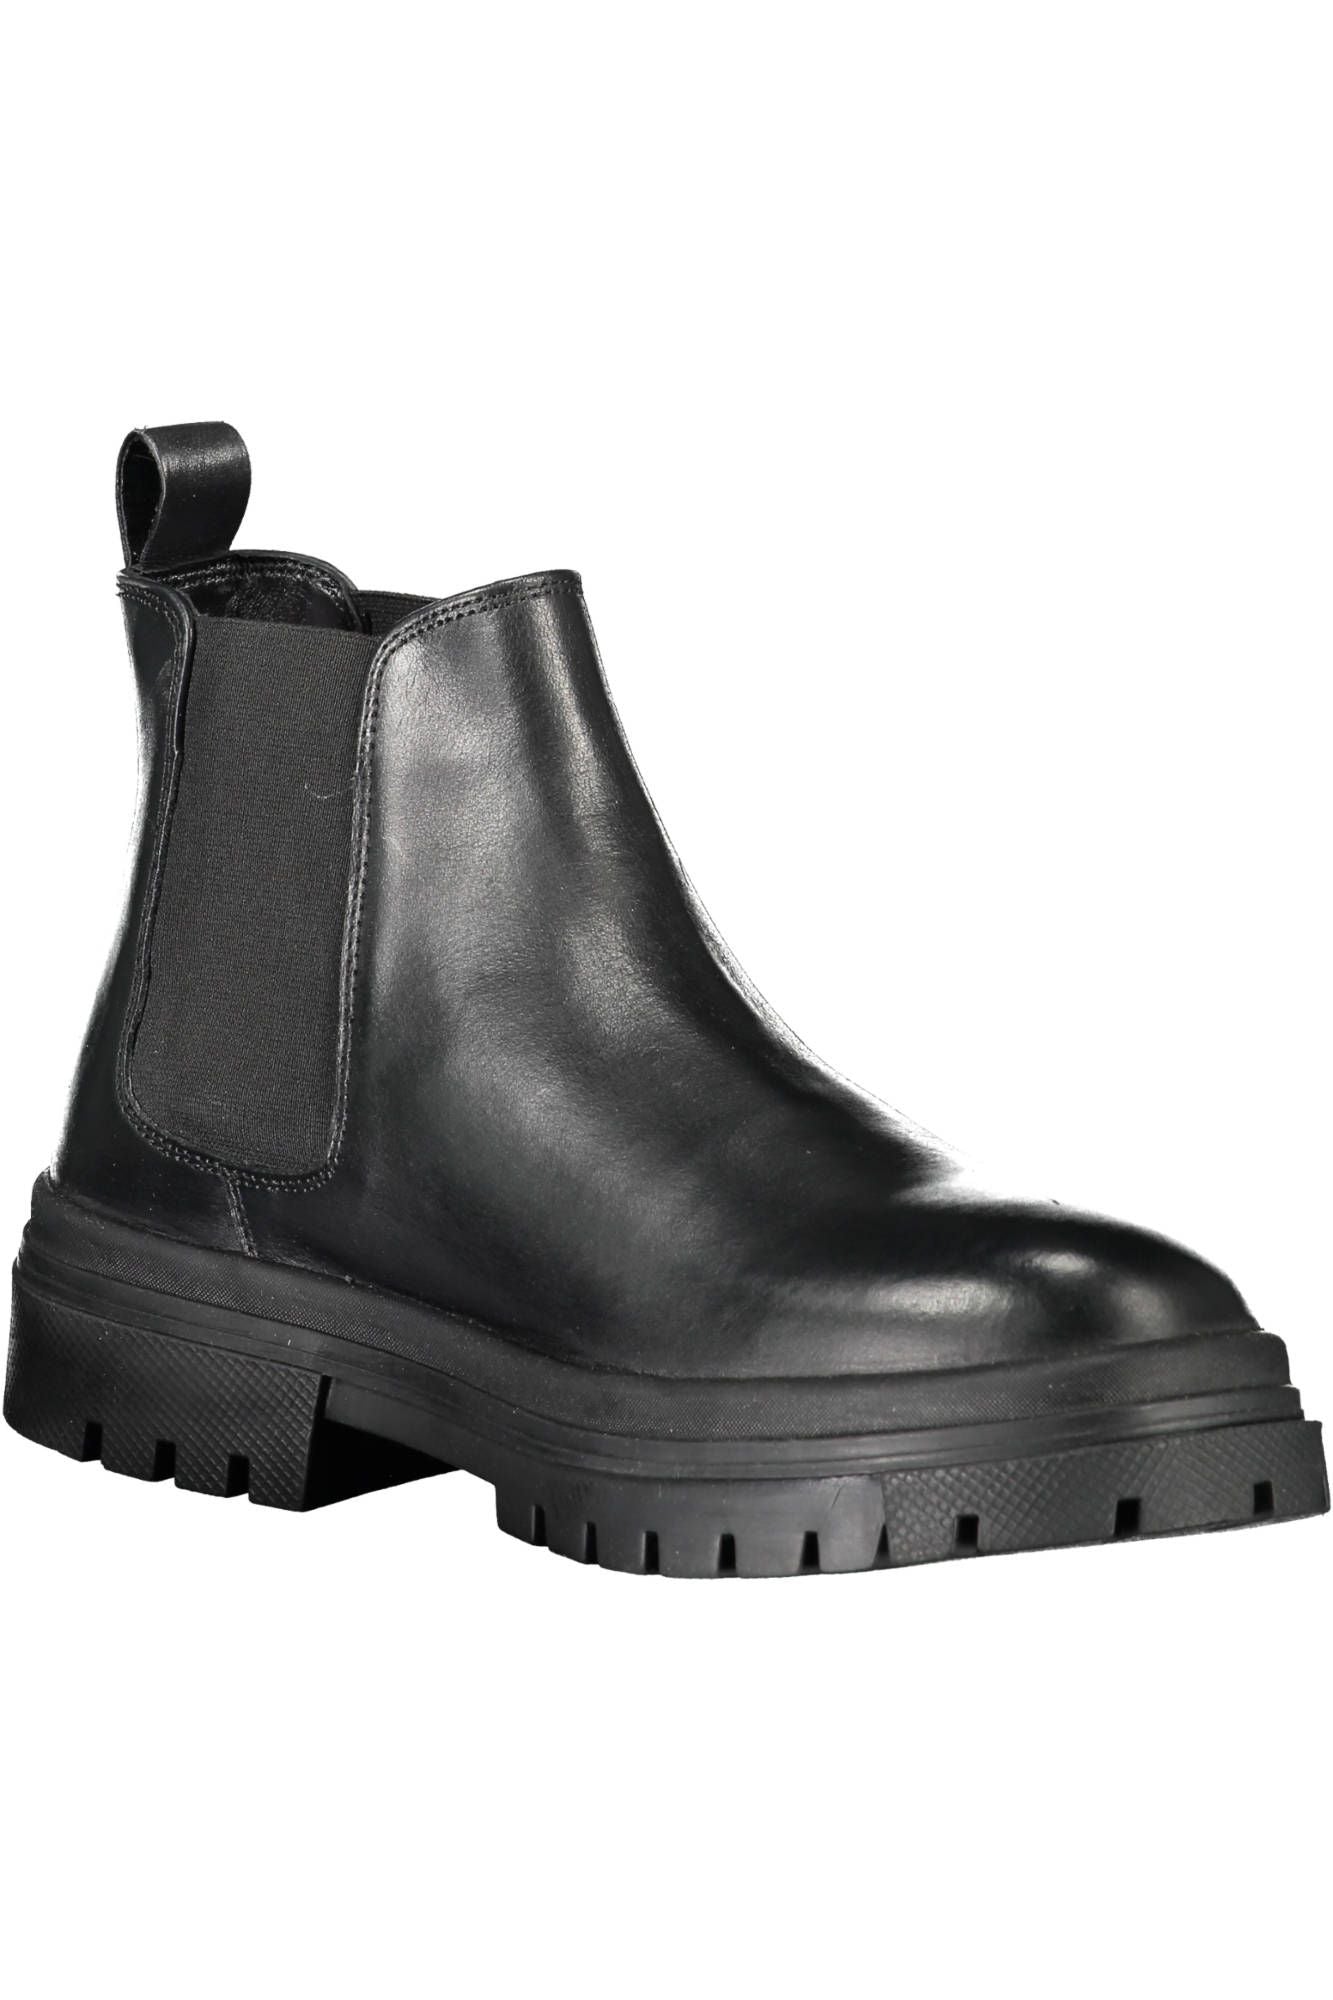 Elegant Black Ankle Boots with Side Elastic